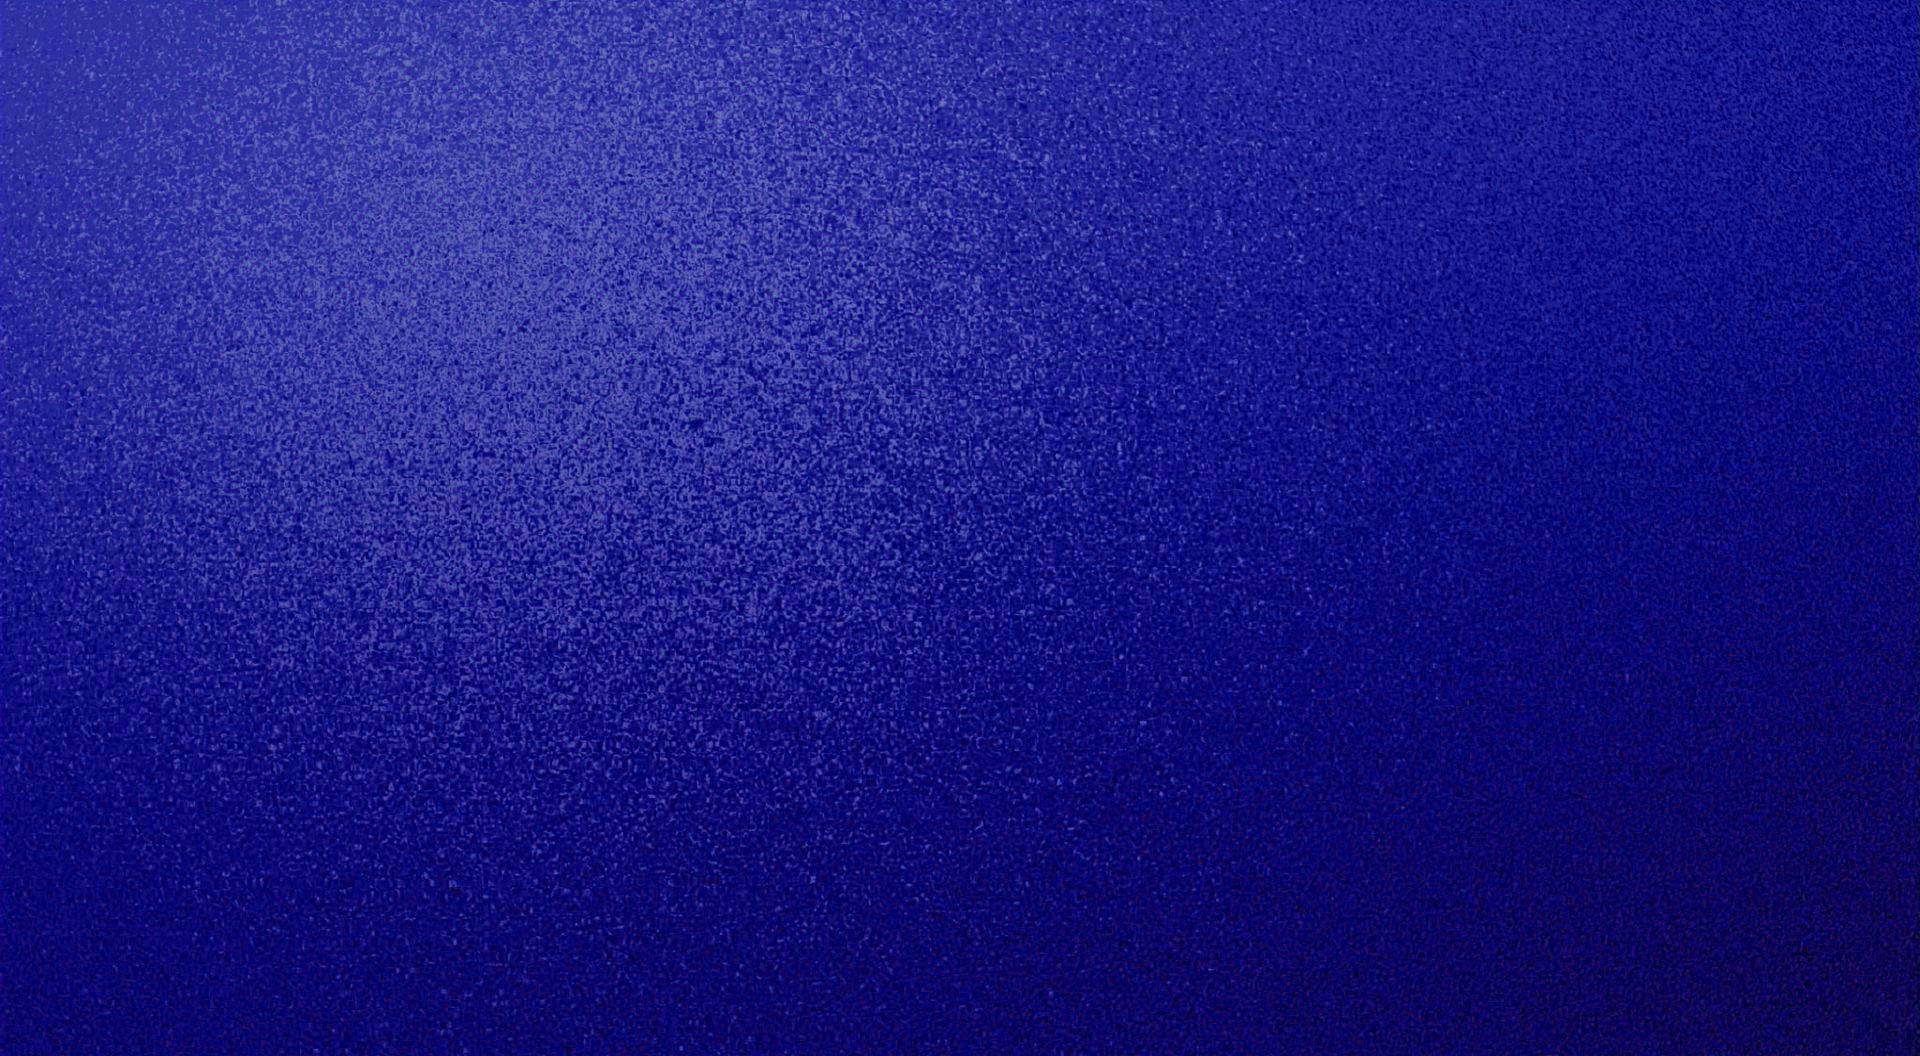 Dark blueroyal blue textured speckled desktop background wallpaper